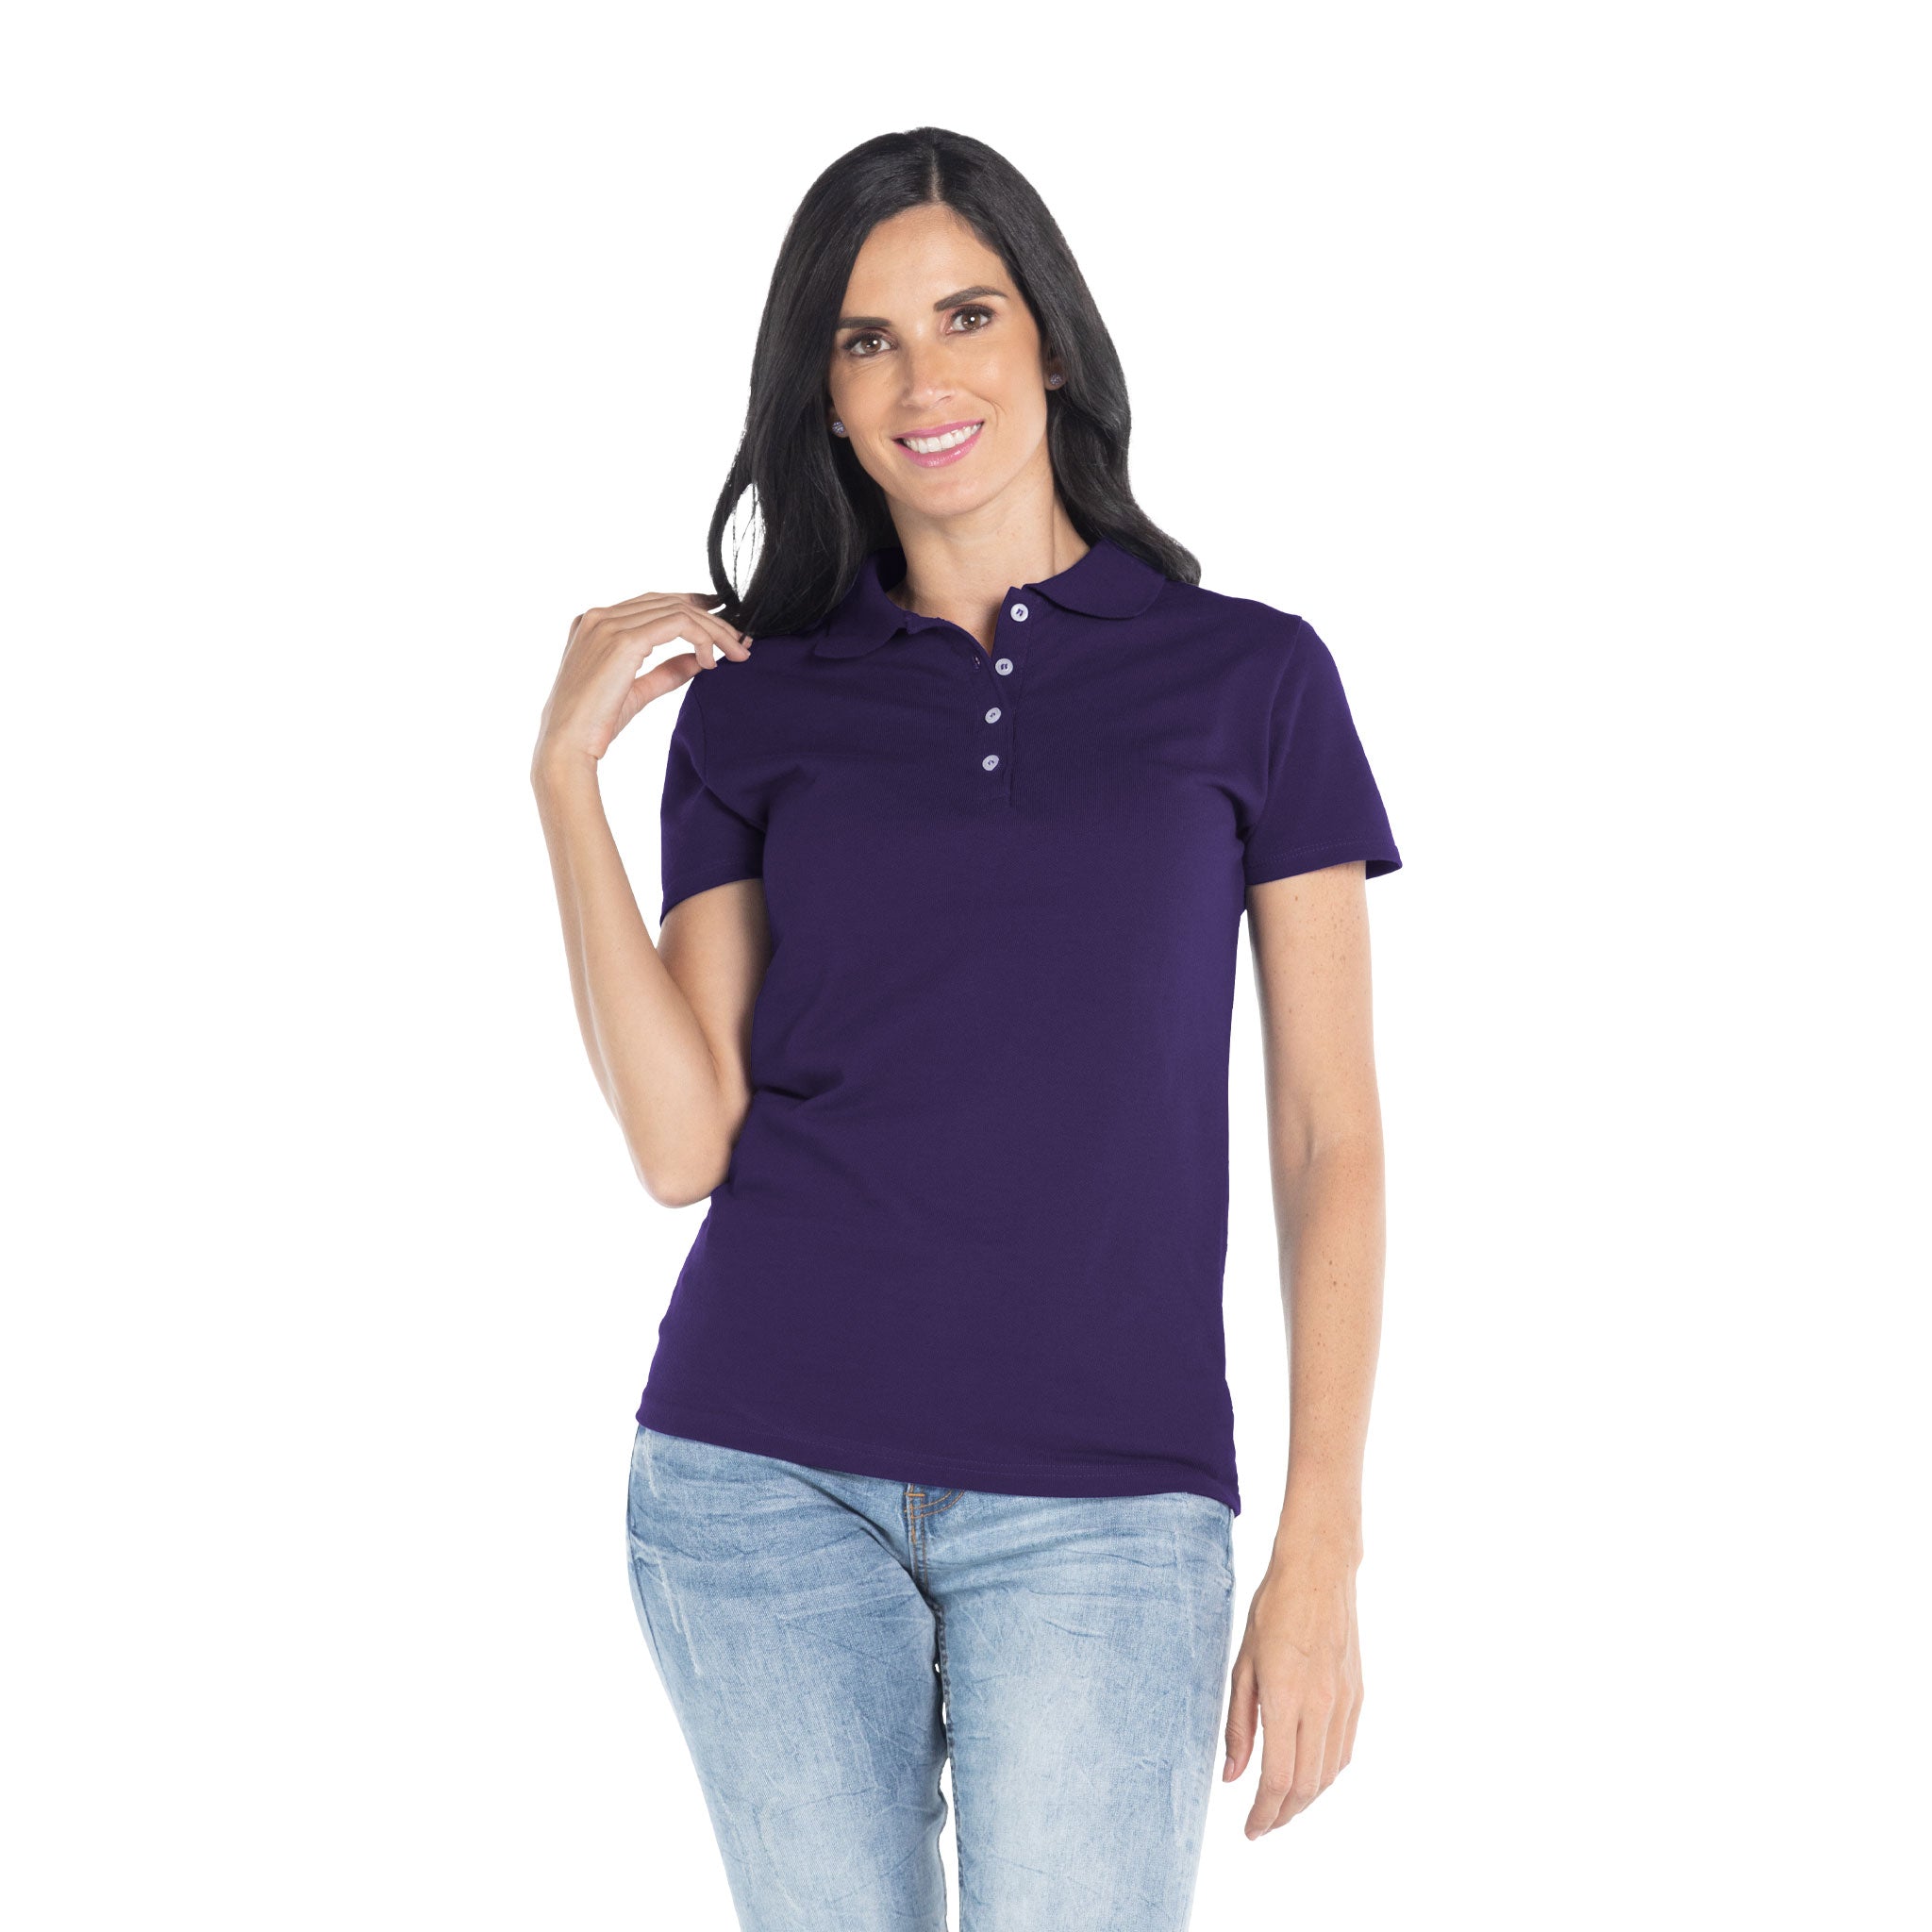 Sport Women\'s Yazbek USA Shirt (Purple) – Silhouette Mint